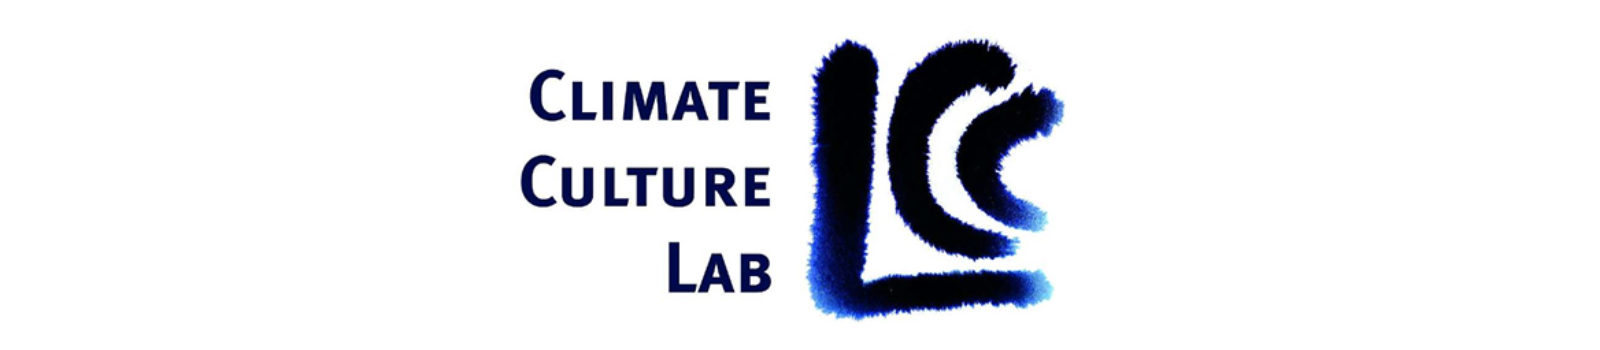 Climate Culture Lab